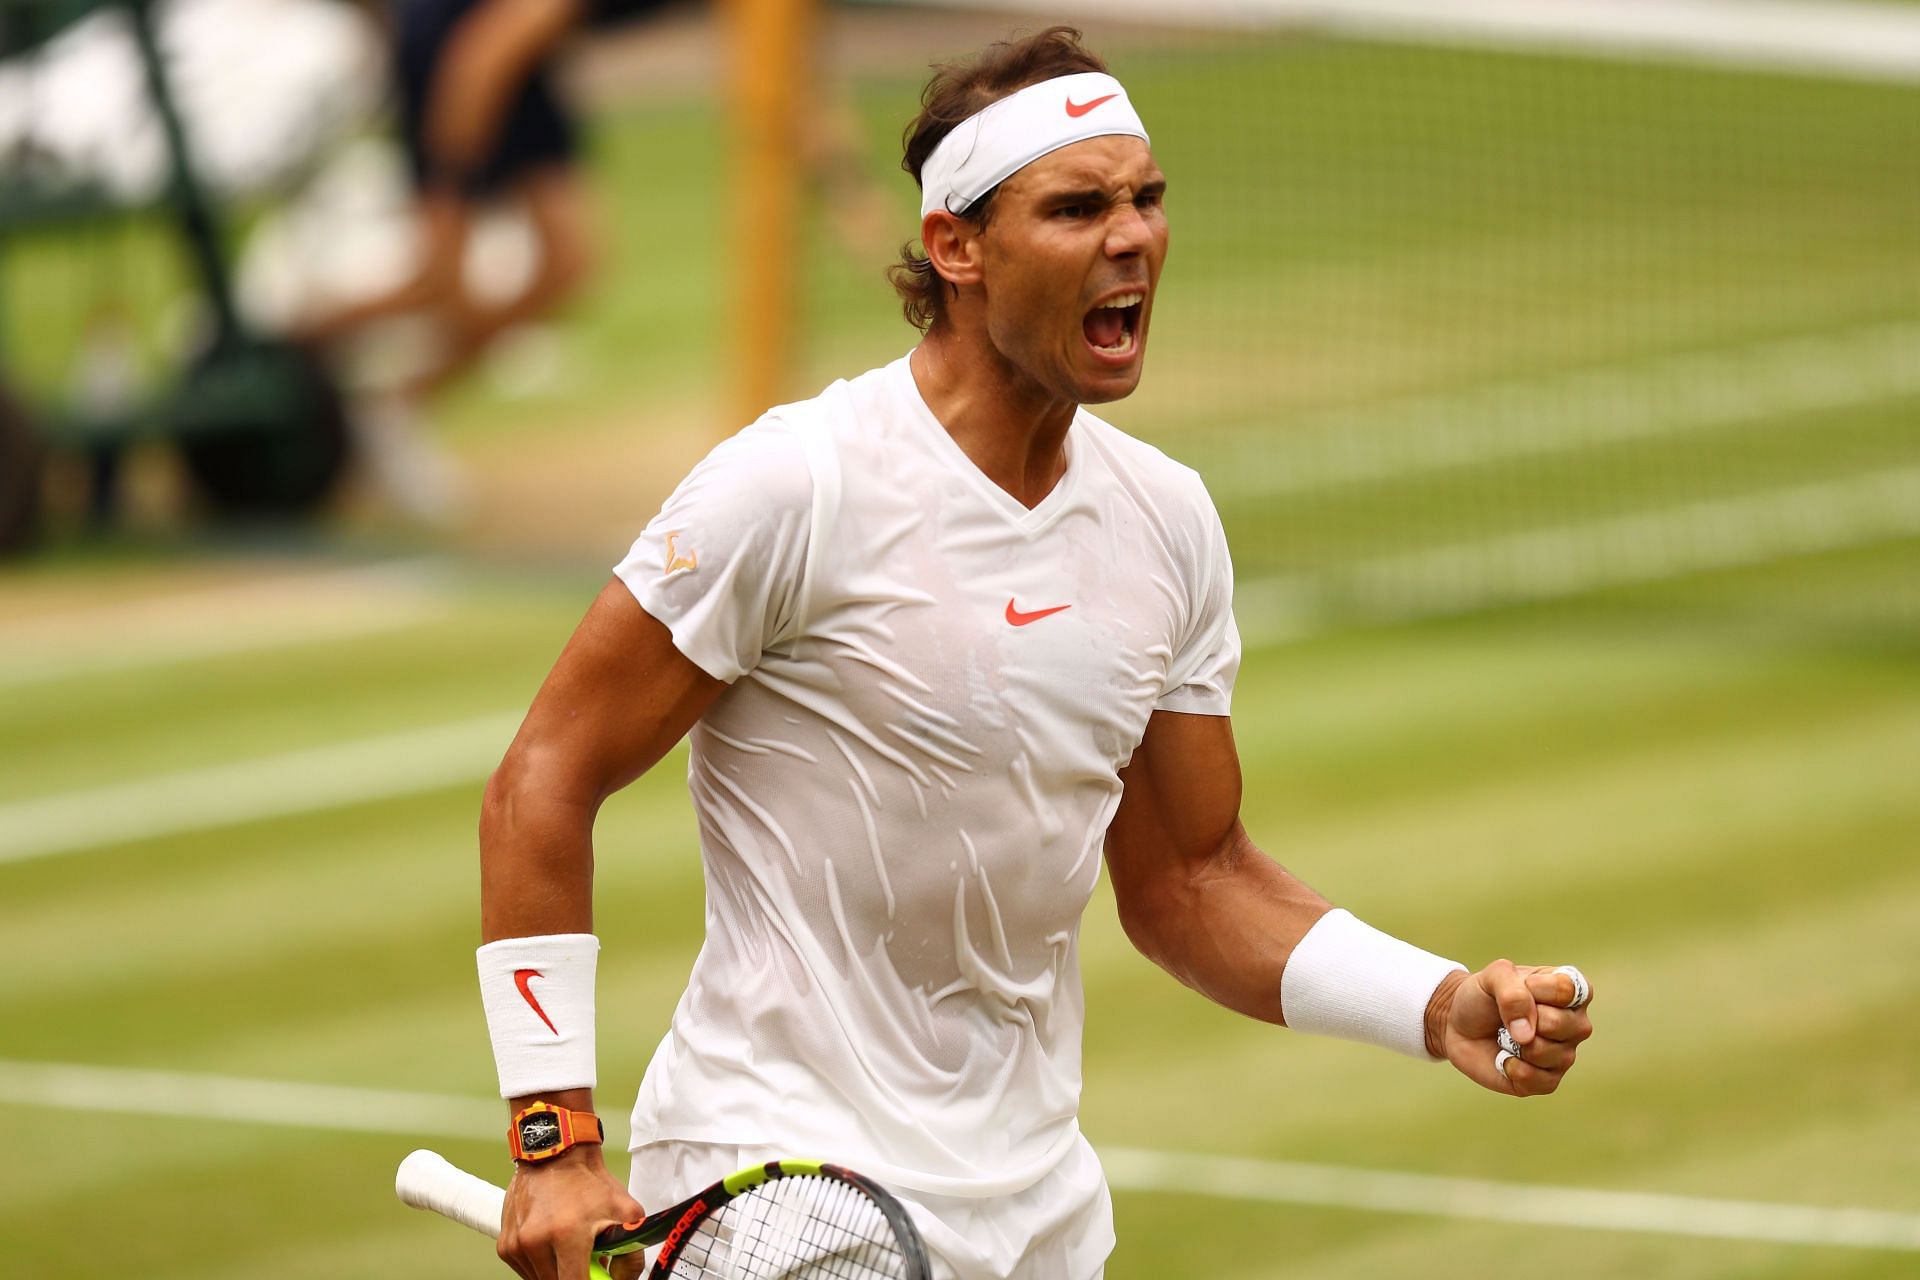 Rafael Nadal has won the Australian Open and Roland Garros this year